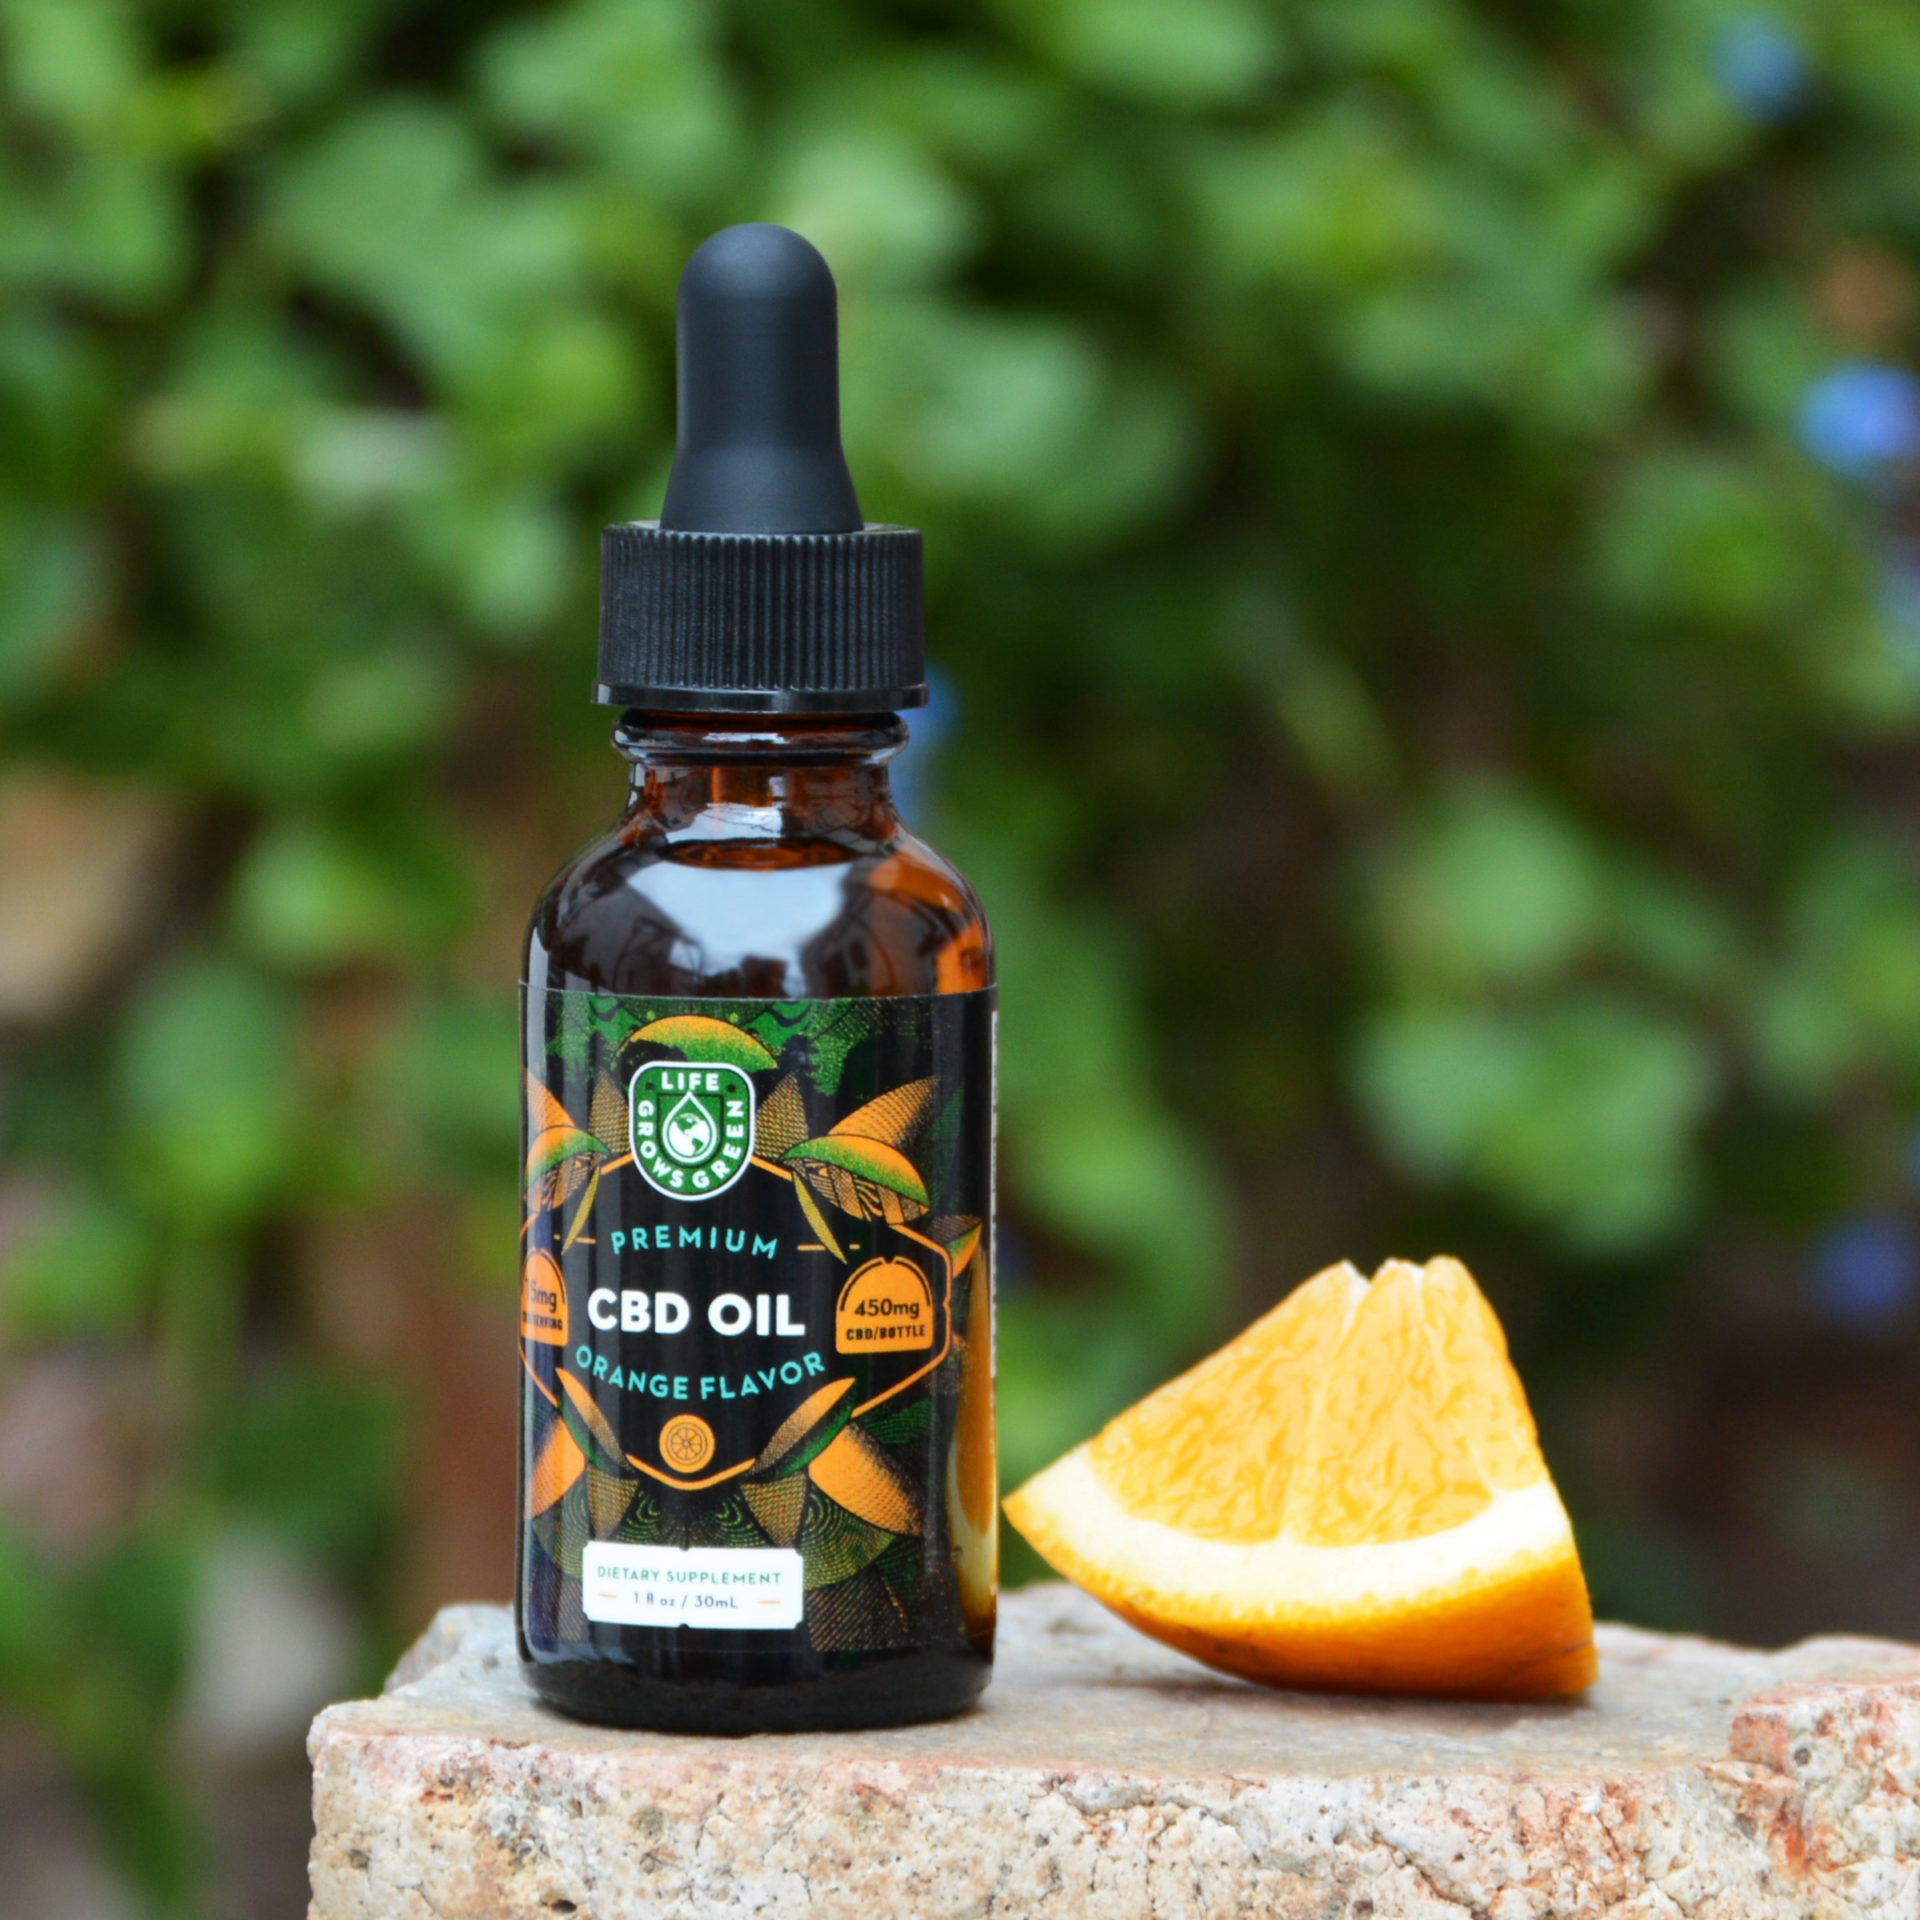 A bottle of Life Grows Green orange flavored CBD oil next to an orange slice.